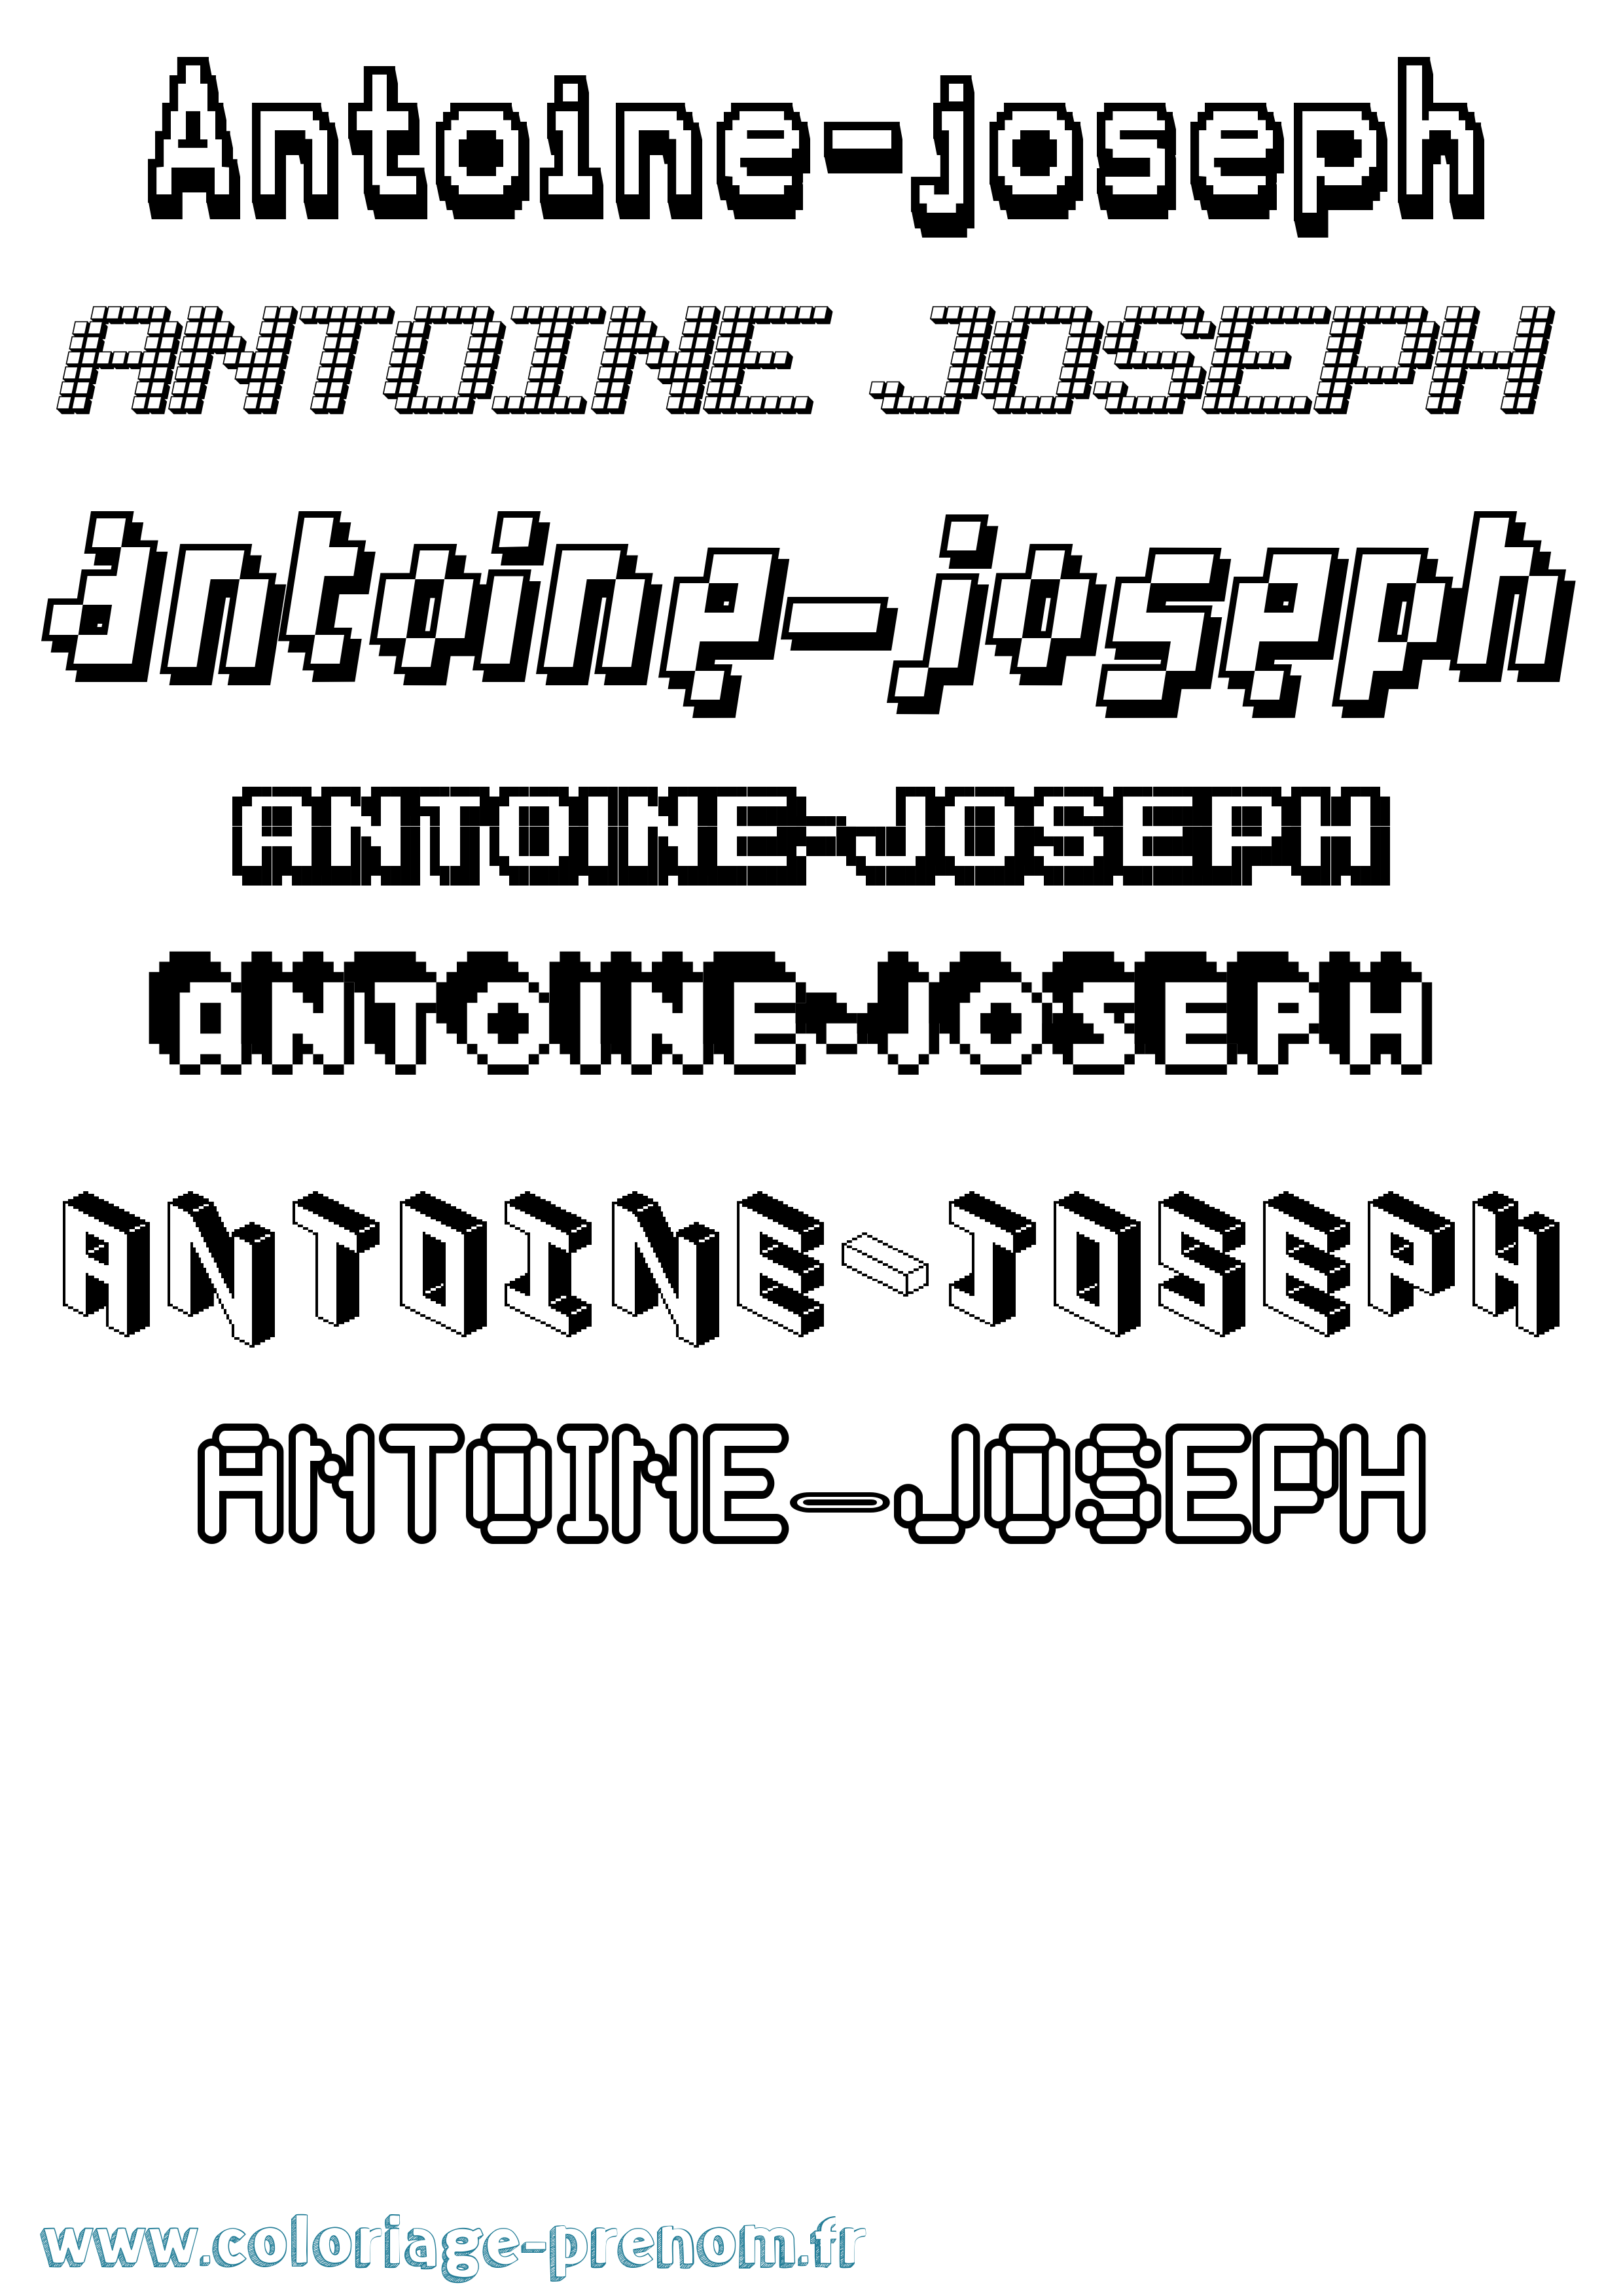 Coloriage prénom Antoine-Joseph Pixel